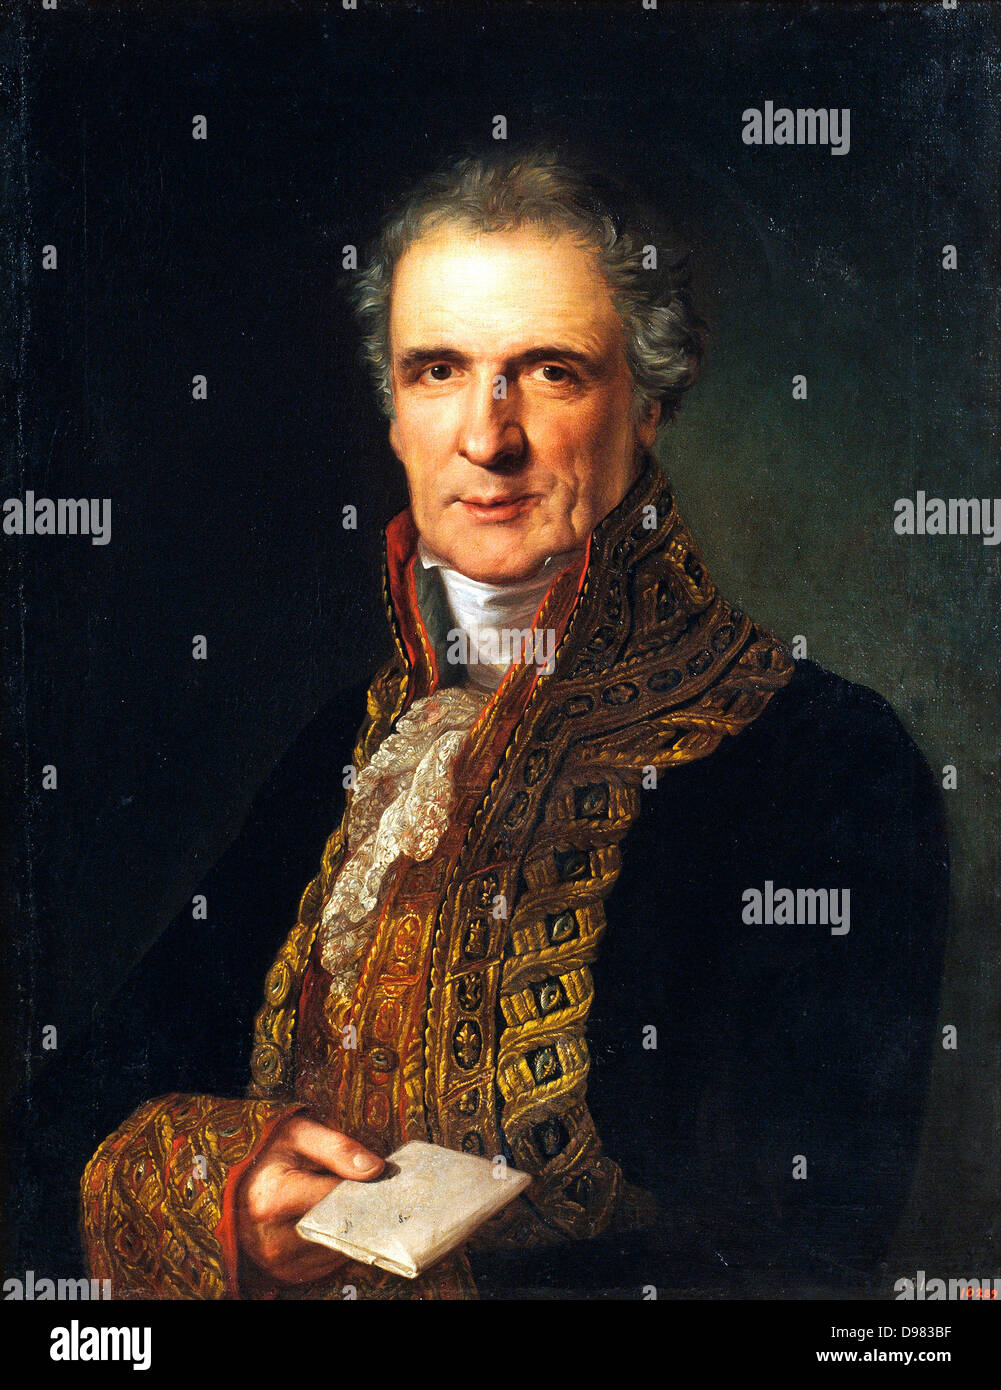 Bernat López Piquer, Portrait of José María Díez de Aznar 1832 Oil on canvas. Museu Nacional d'Art de Catalunya, Barcelona, Spai Stock Photo